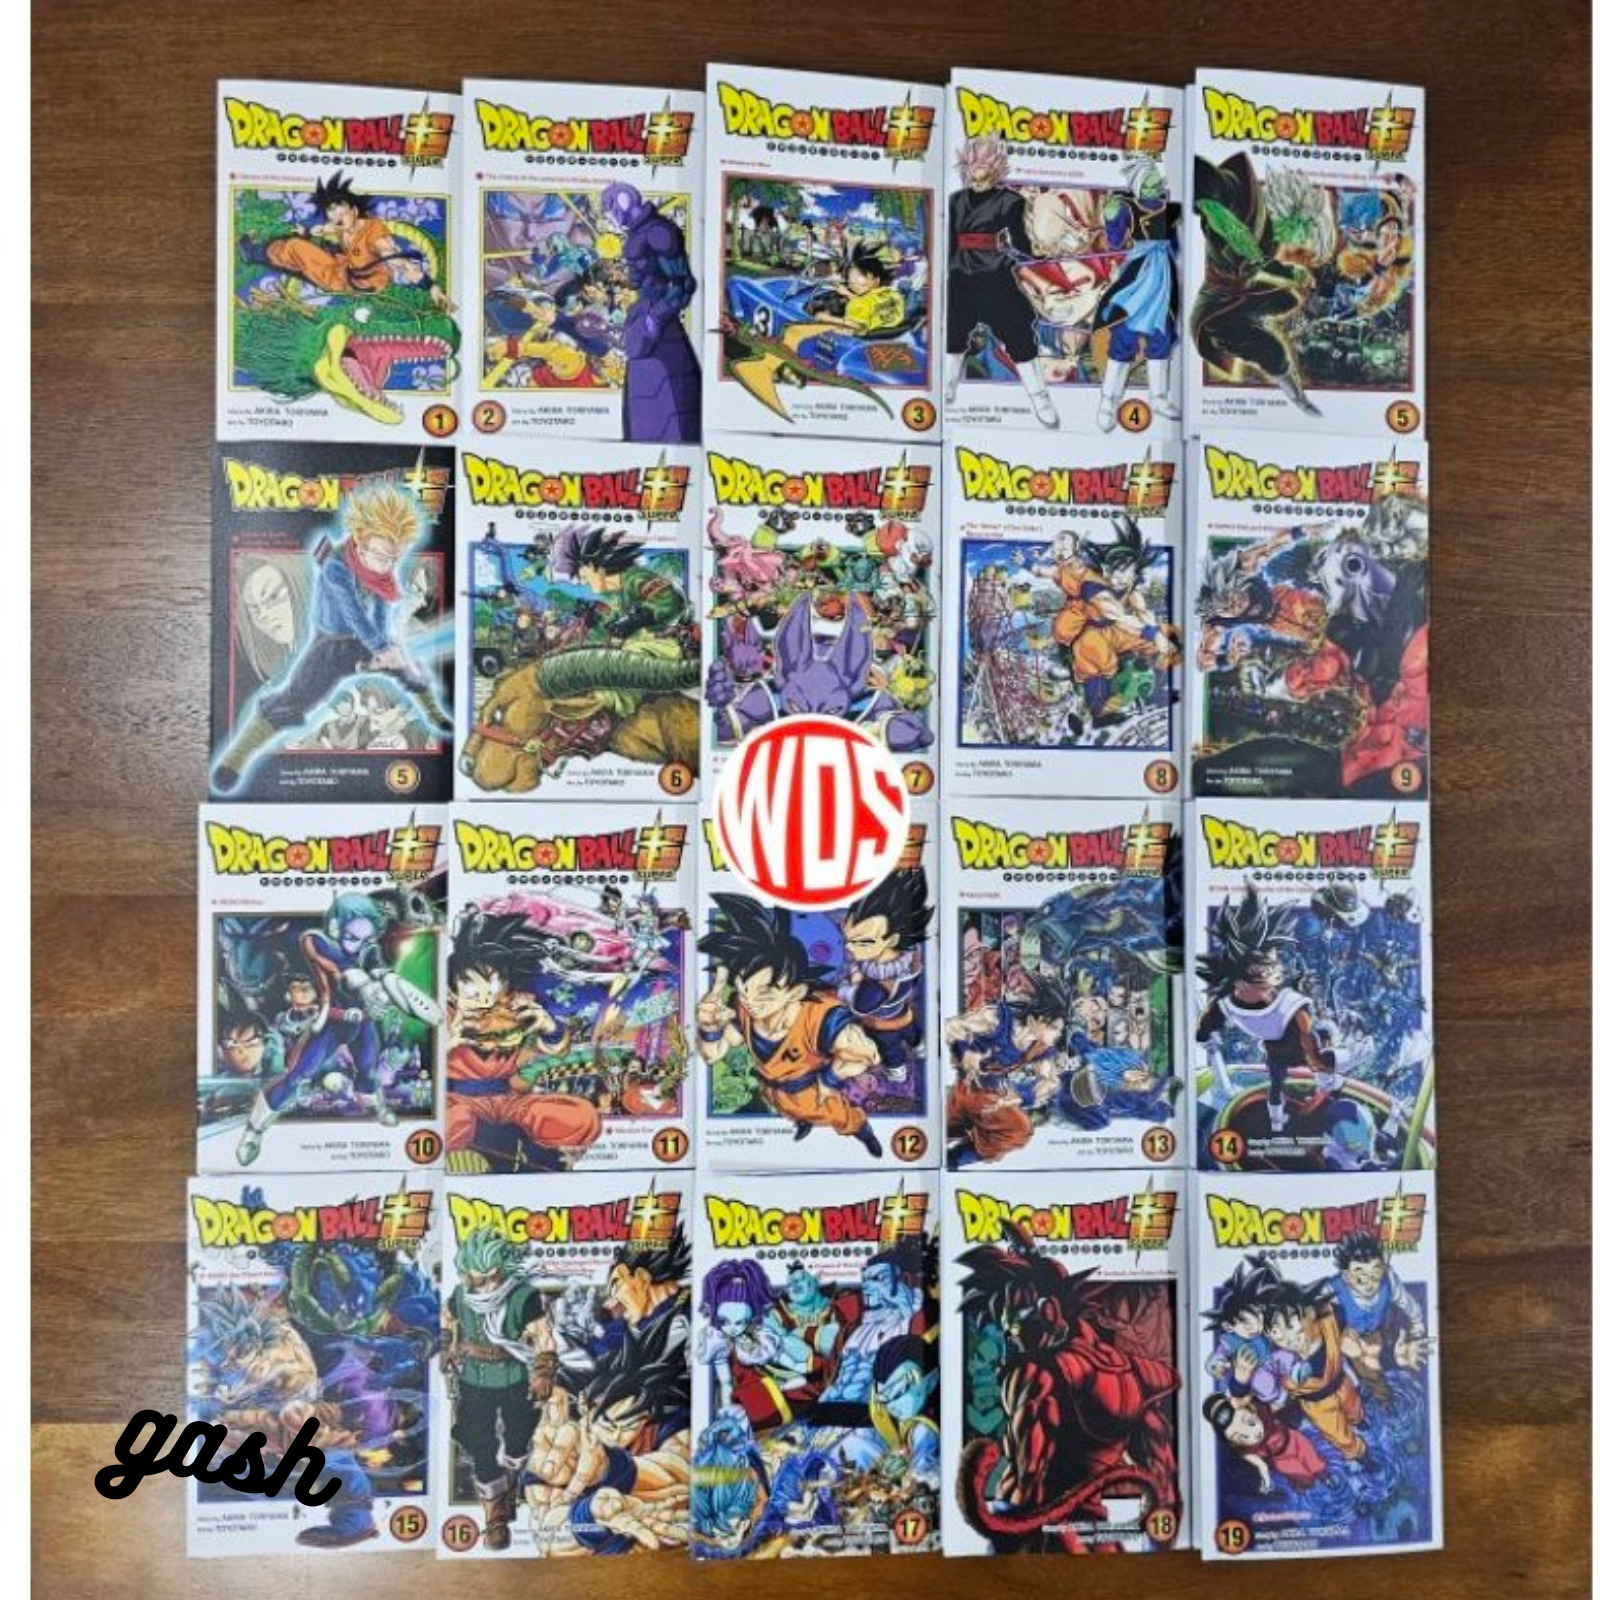 New Manga Comic Dragon Ball Super Set Volumes 1-20  Book English Version